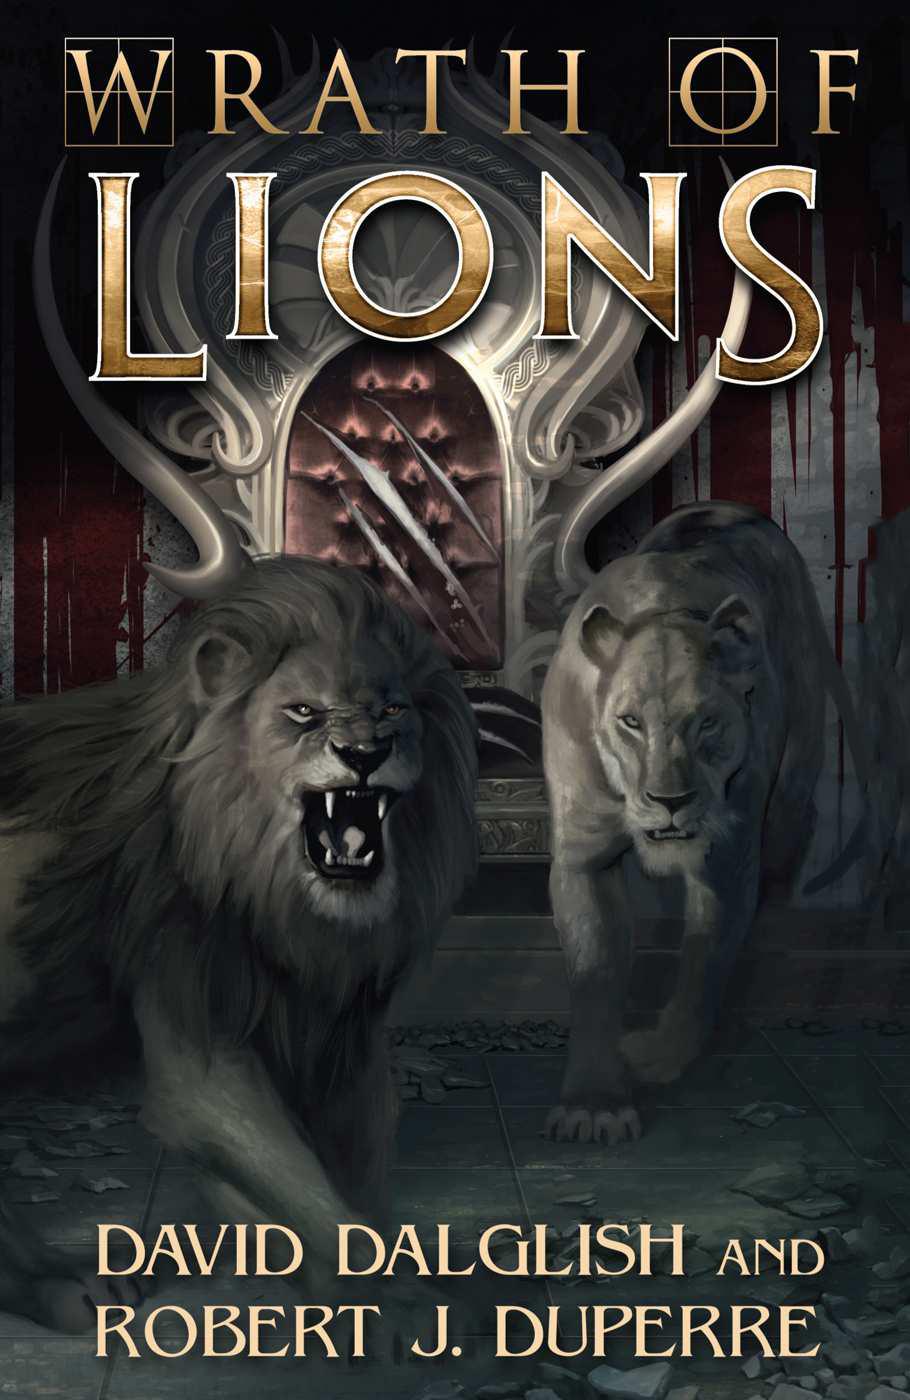 Wrath of Lions by David Dalglish